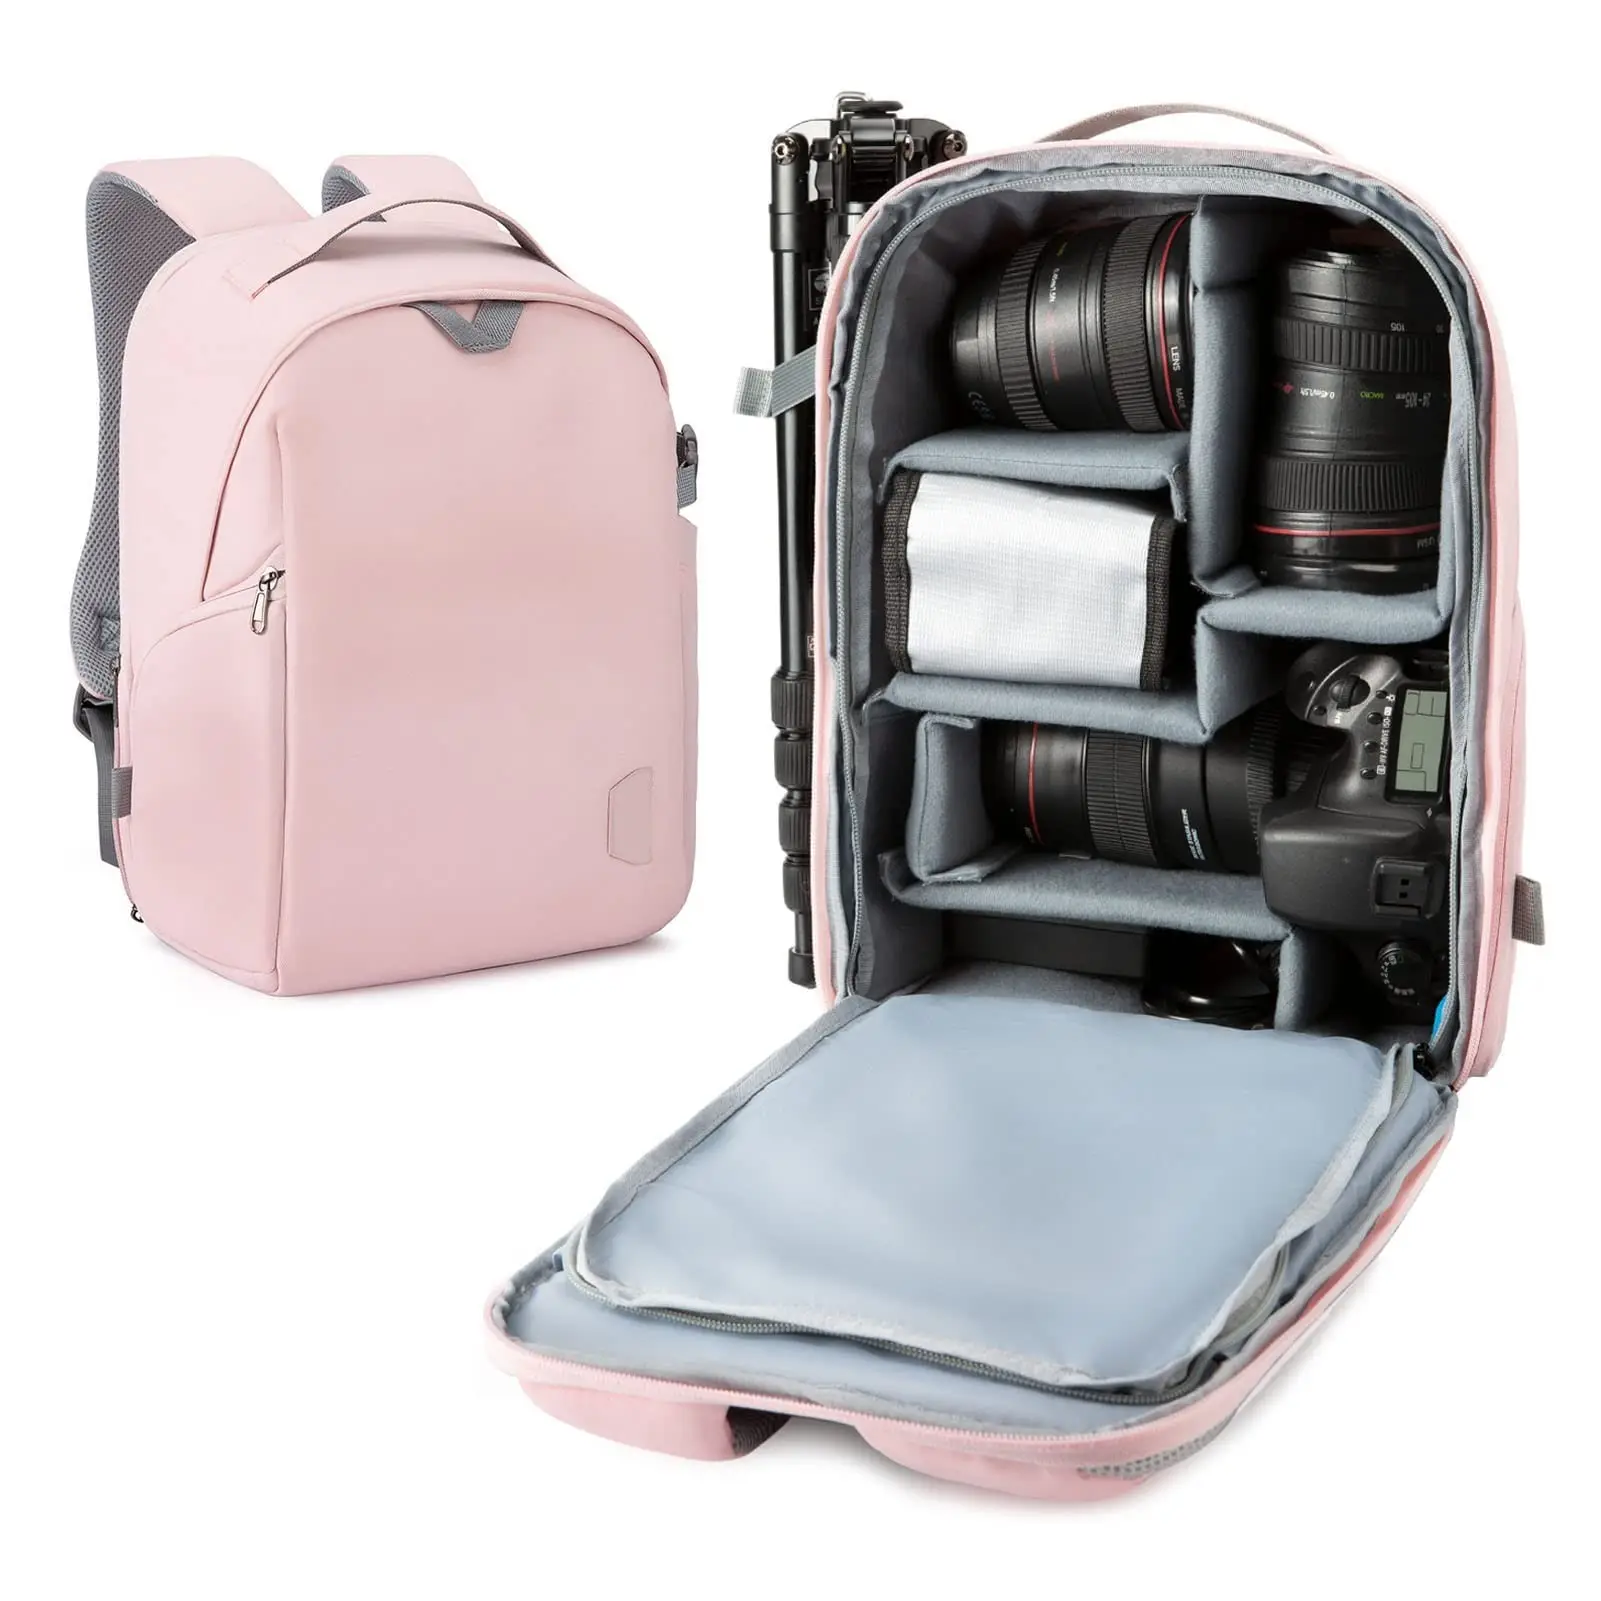 OEM High Quality Waterproof Laptop Bag with Rain Cover DSLR/SLR Camera Case Camera Bag Backpack For Women